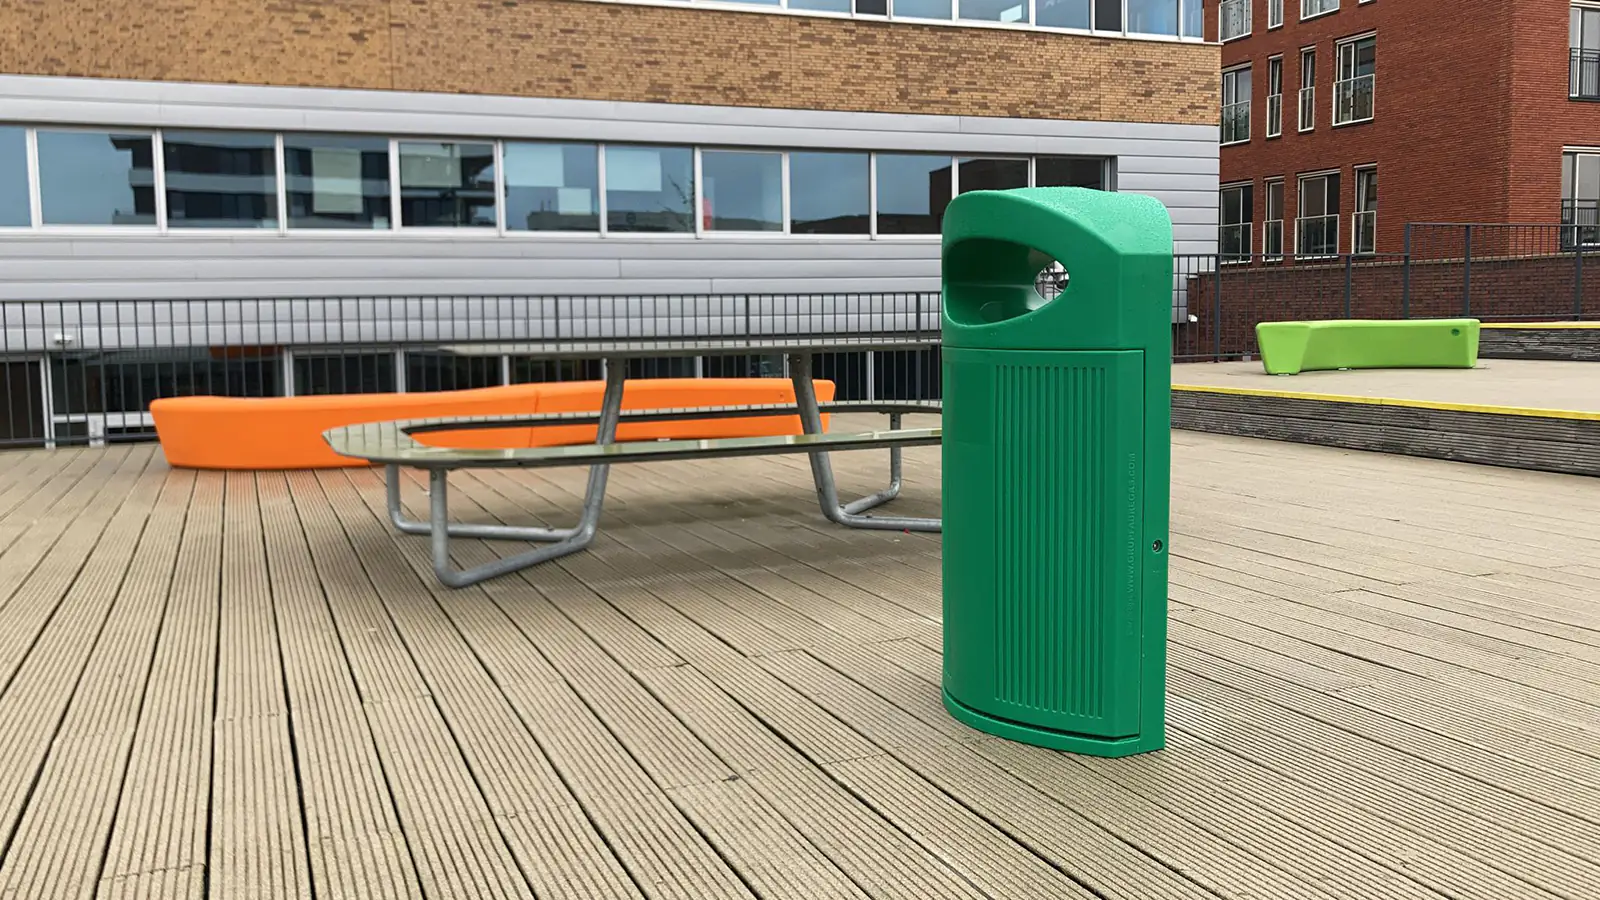 Schoolyard bins in the Netherlands